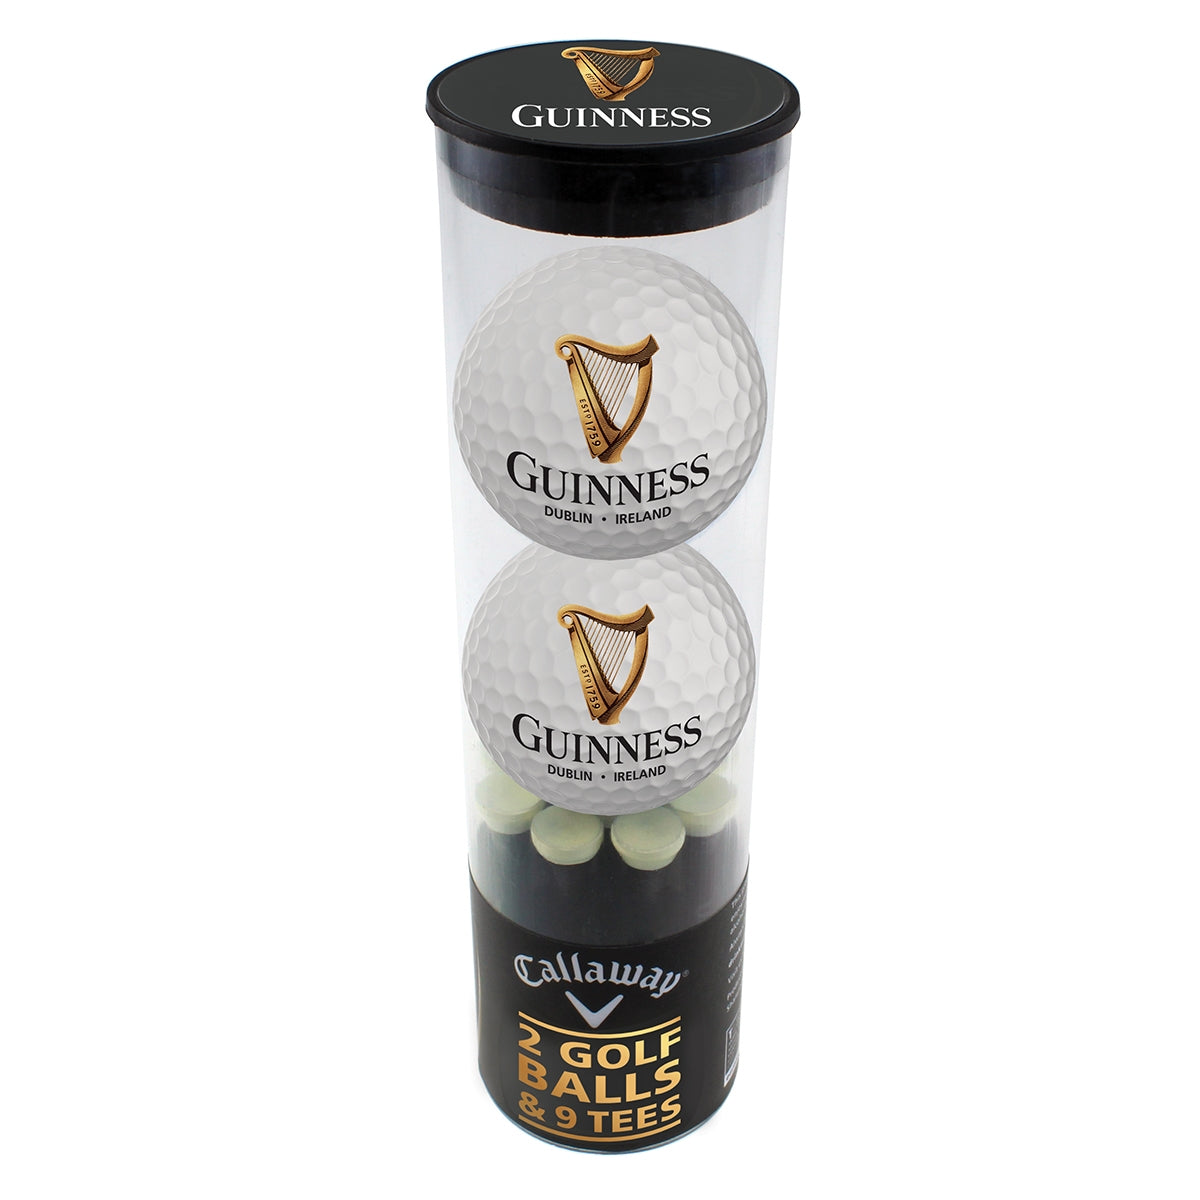 Guinness Golf Balls and Tee Set